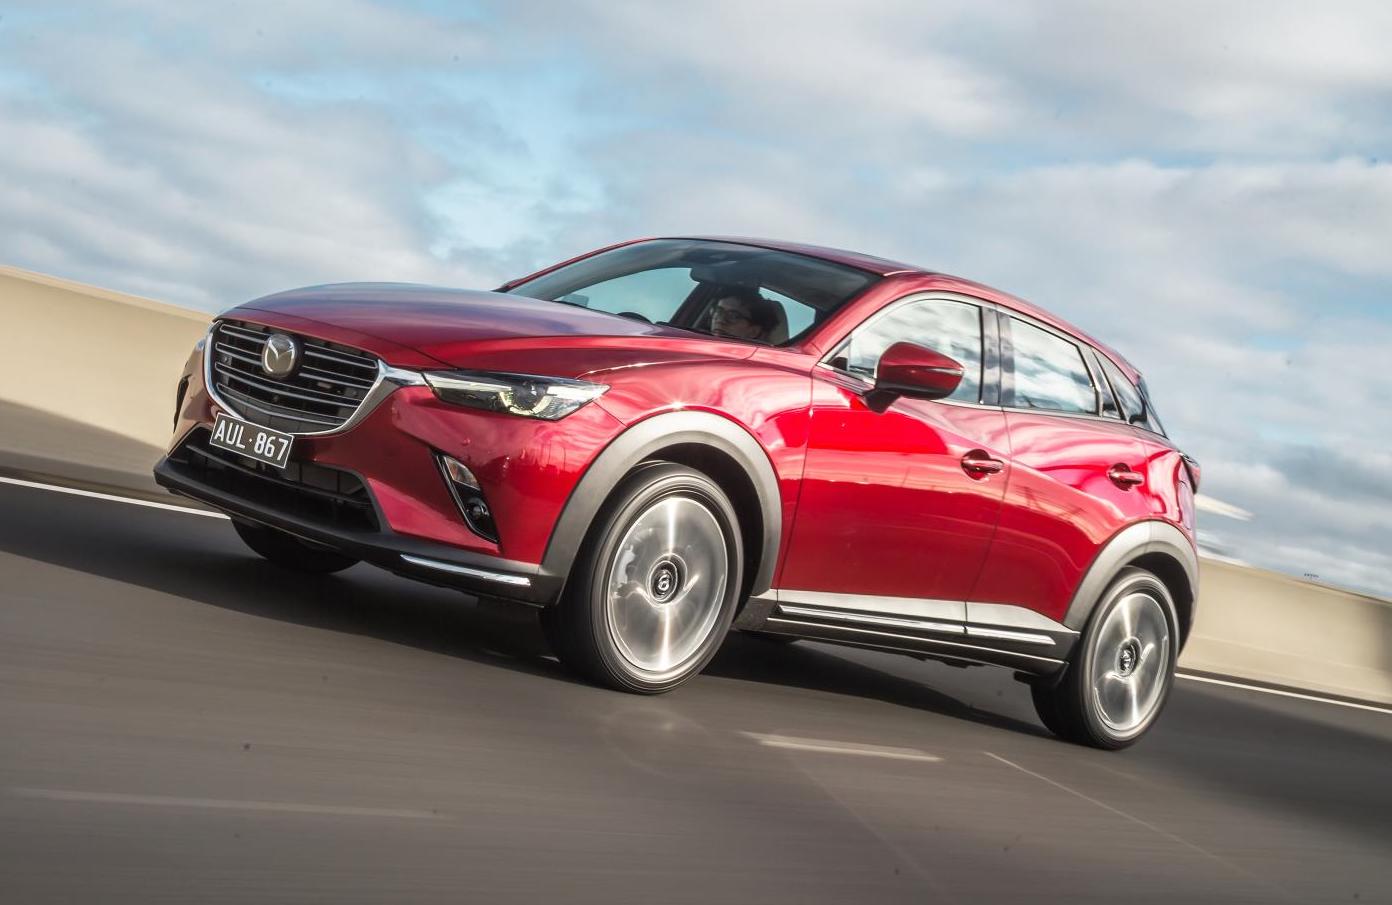 2018 Mazda CX-3 on sale in Australia, adds new 1.8 diesel